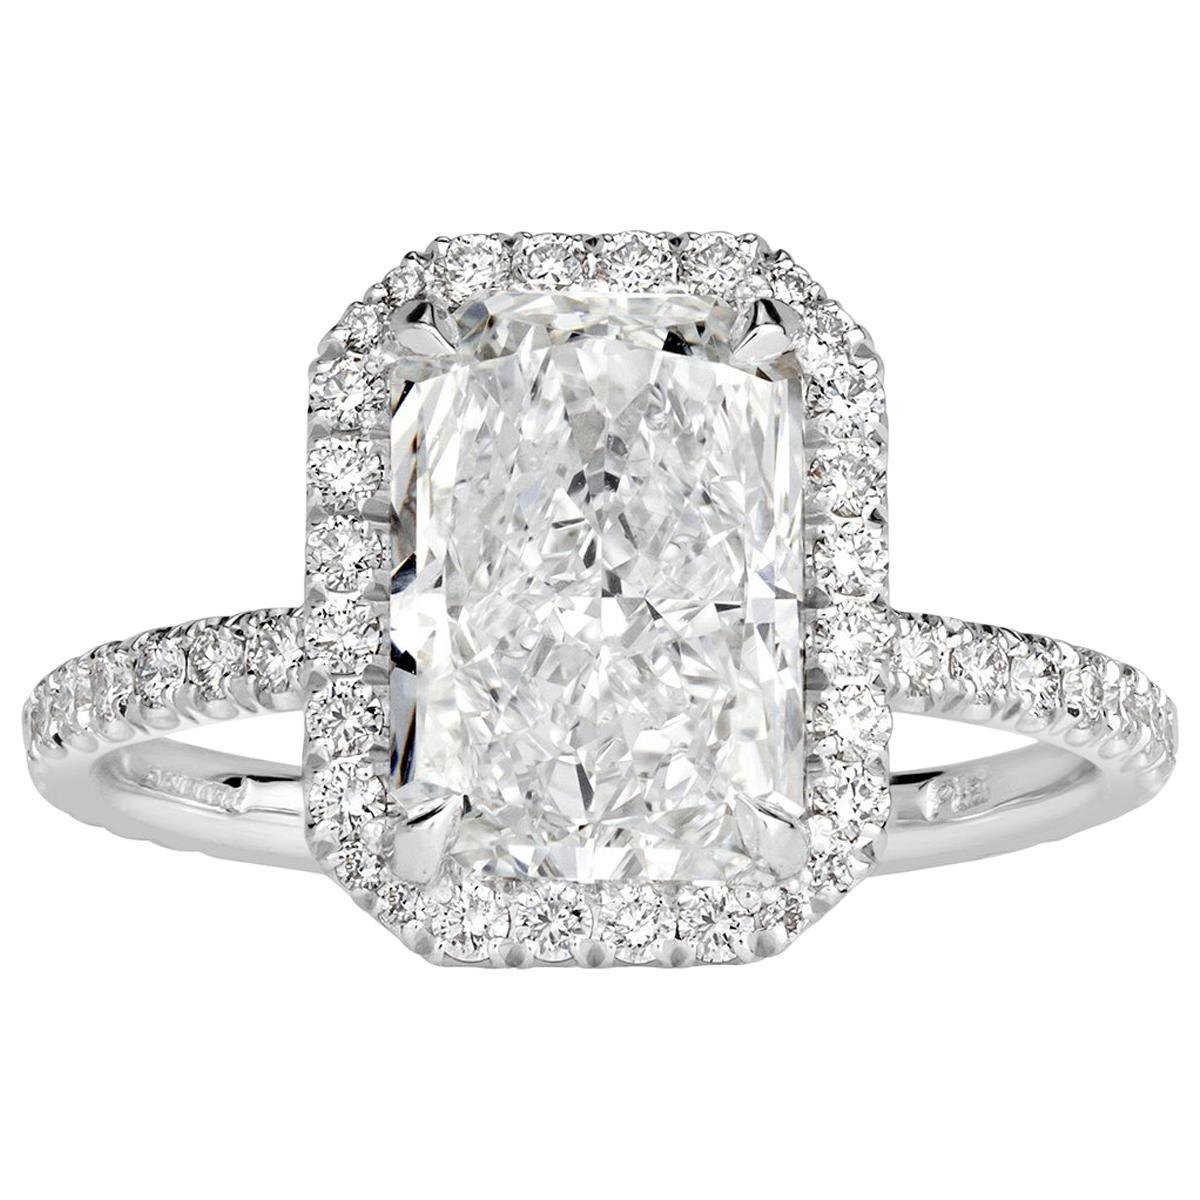 Mark Broumand 3.58 Carat Radiant Cut Diamond Engagement Ring